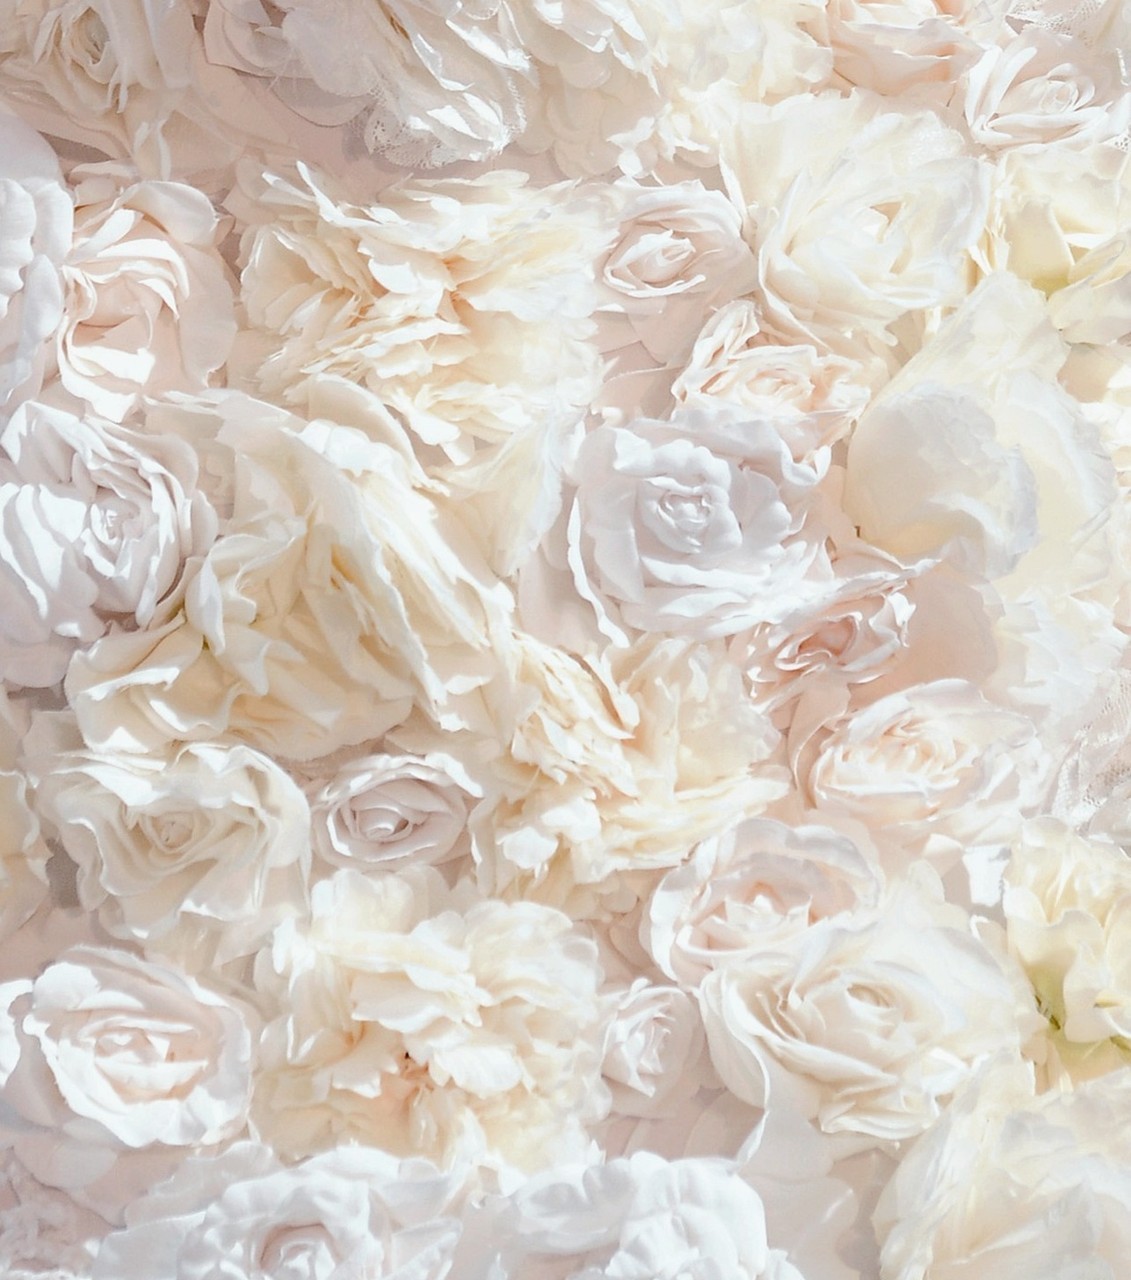 gaeroladid: White Roses Tumblr Images
